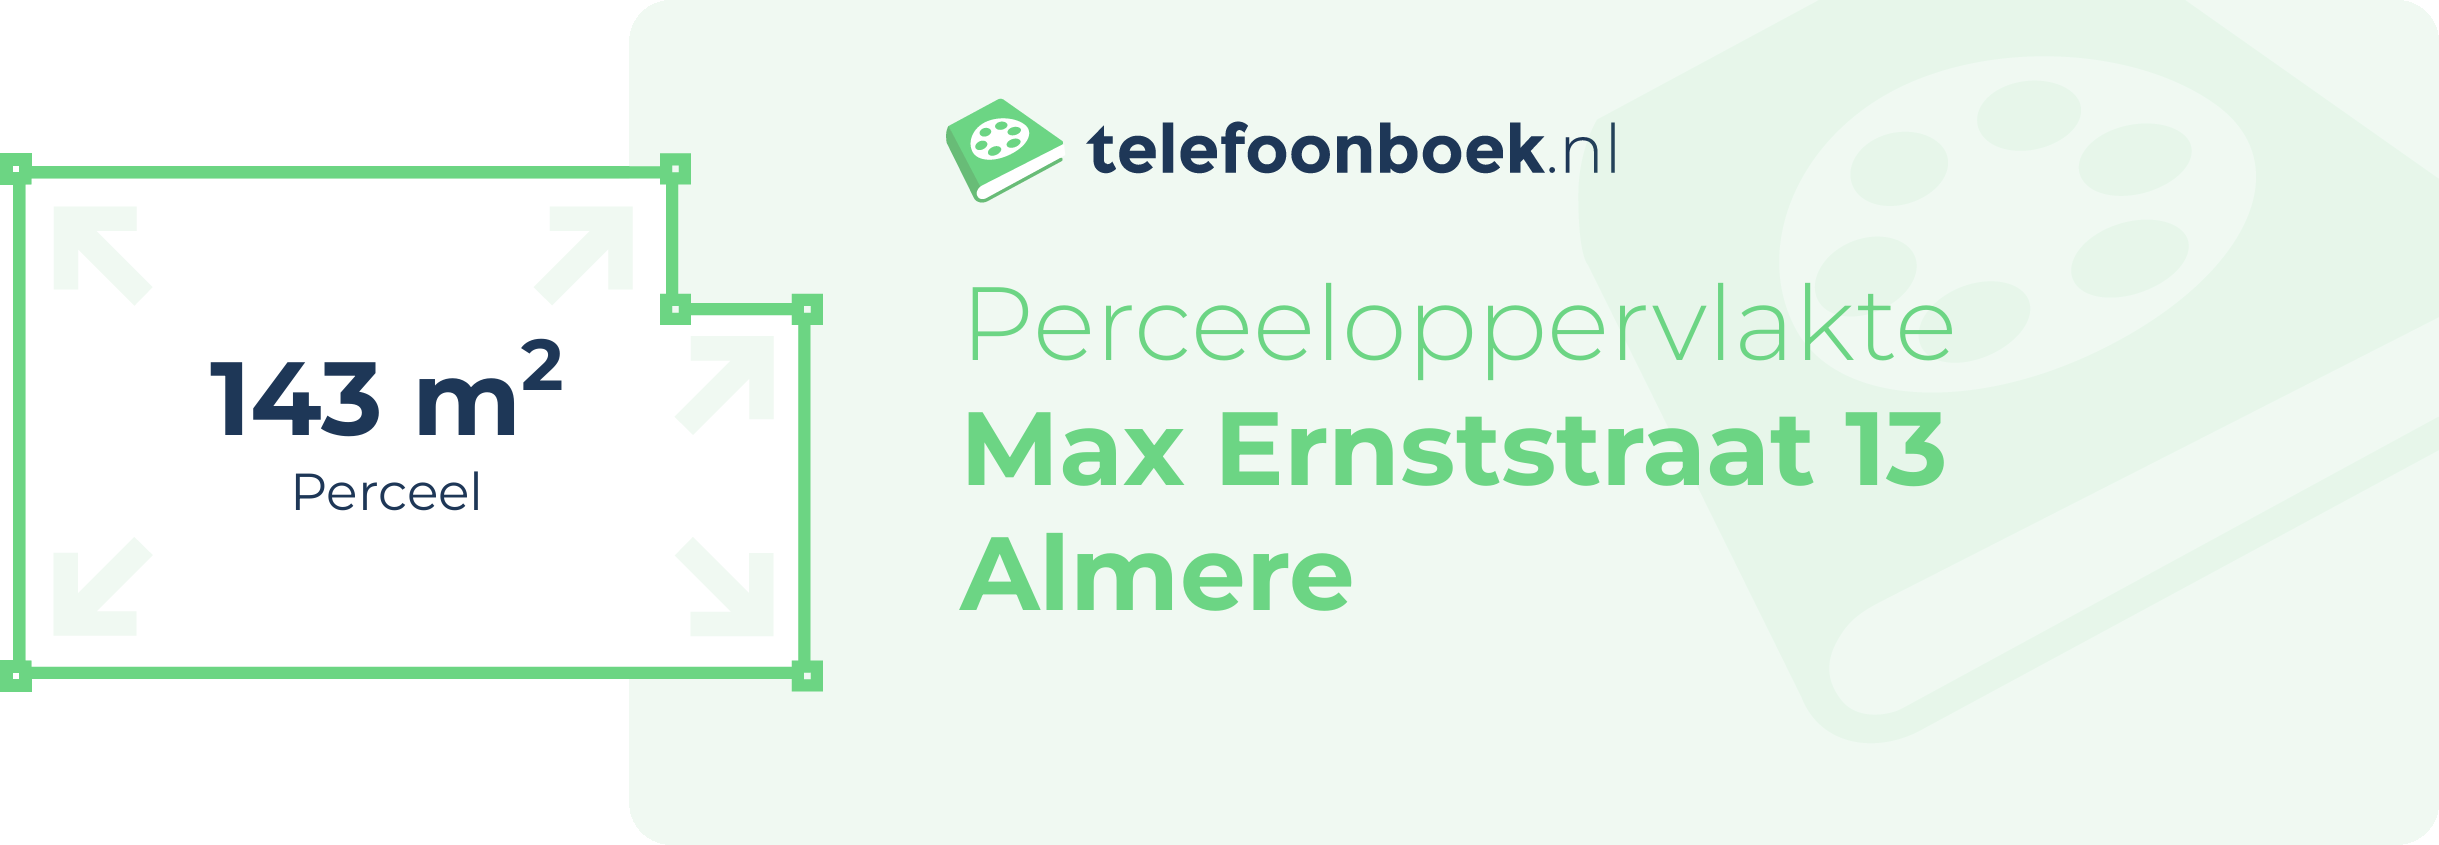 Perceeloppervlakte Max Ernststraat 13 Almere